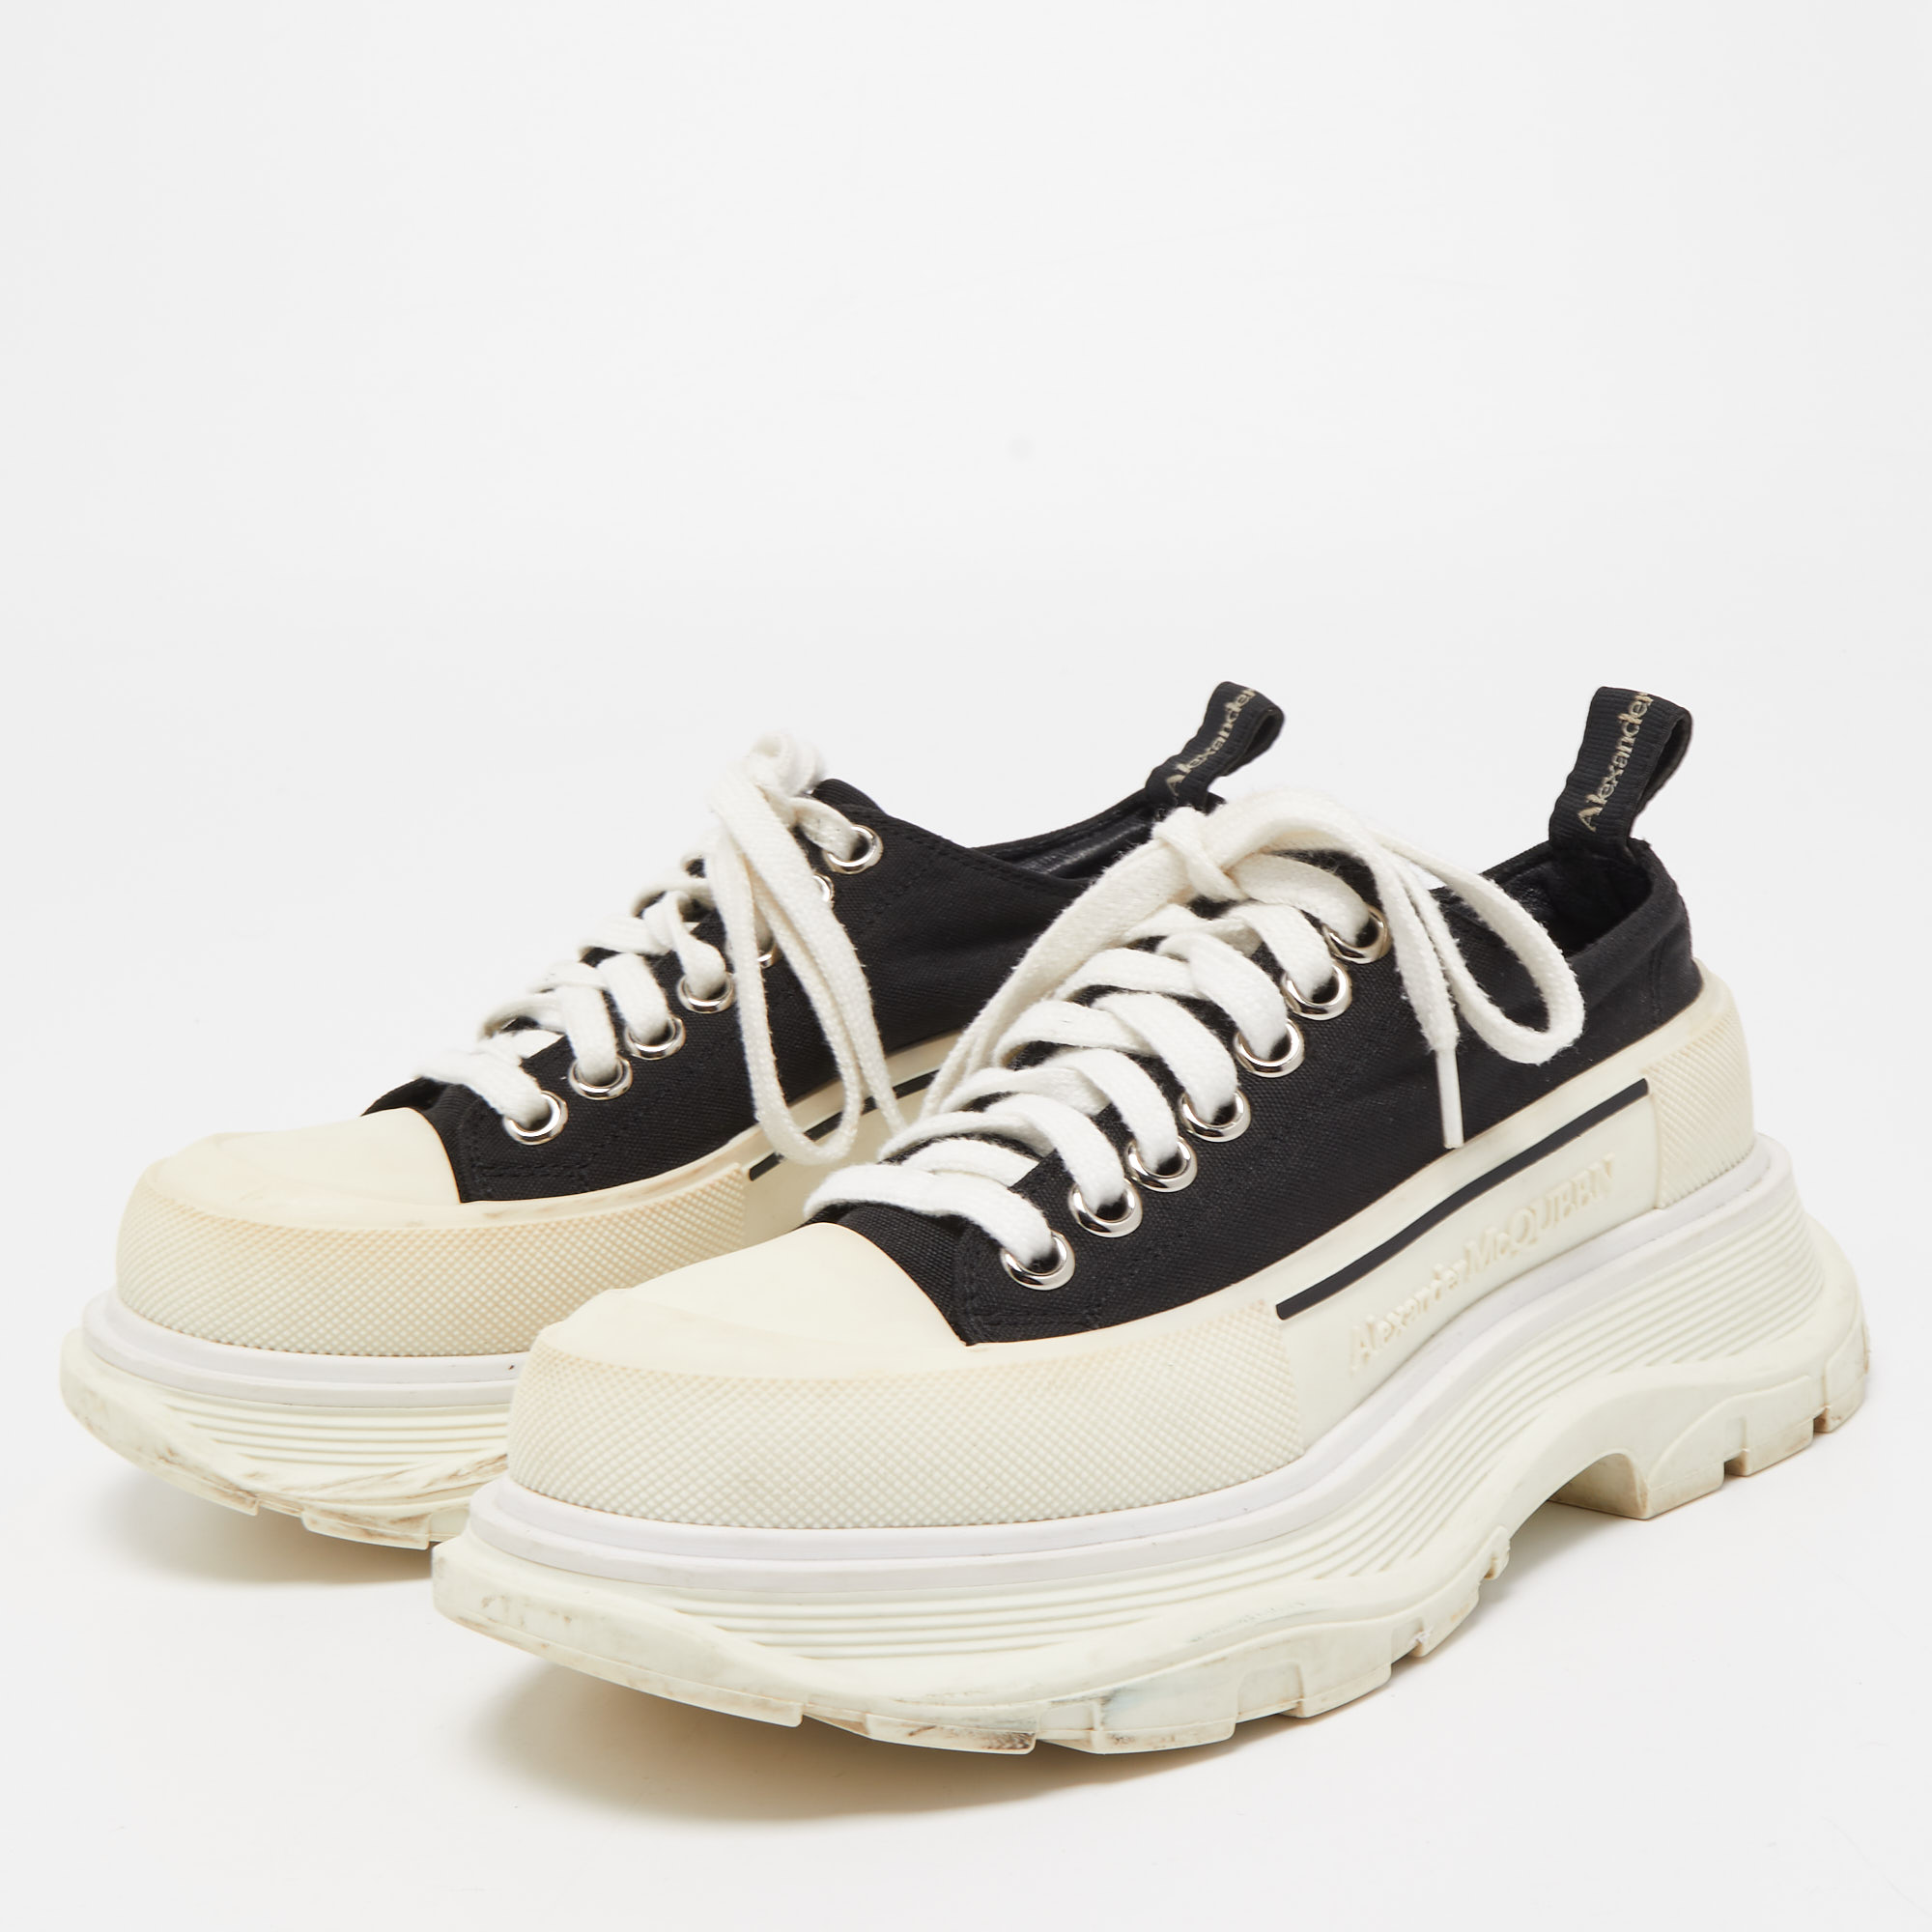 

Alexander McQueen Black / White Canvas Tread Slick Low Top Sneakers Size